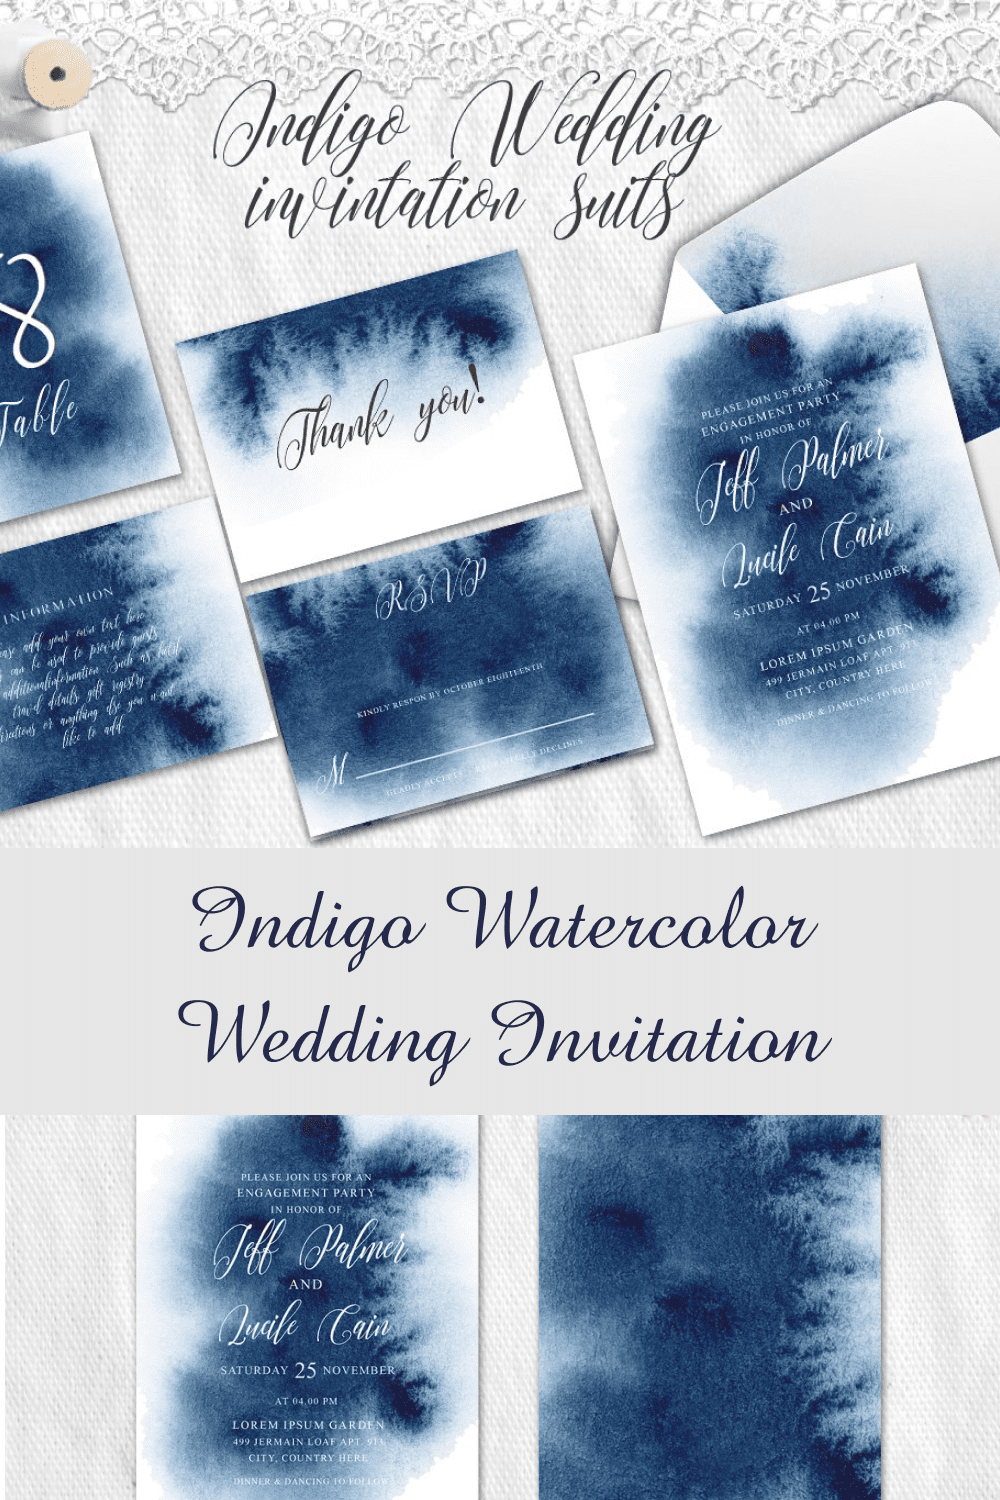 Indigo Watercolor Wedding Invitation Pinterest image.